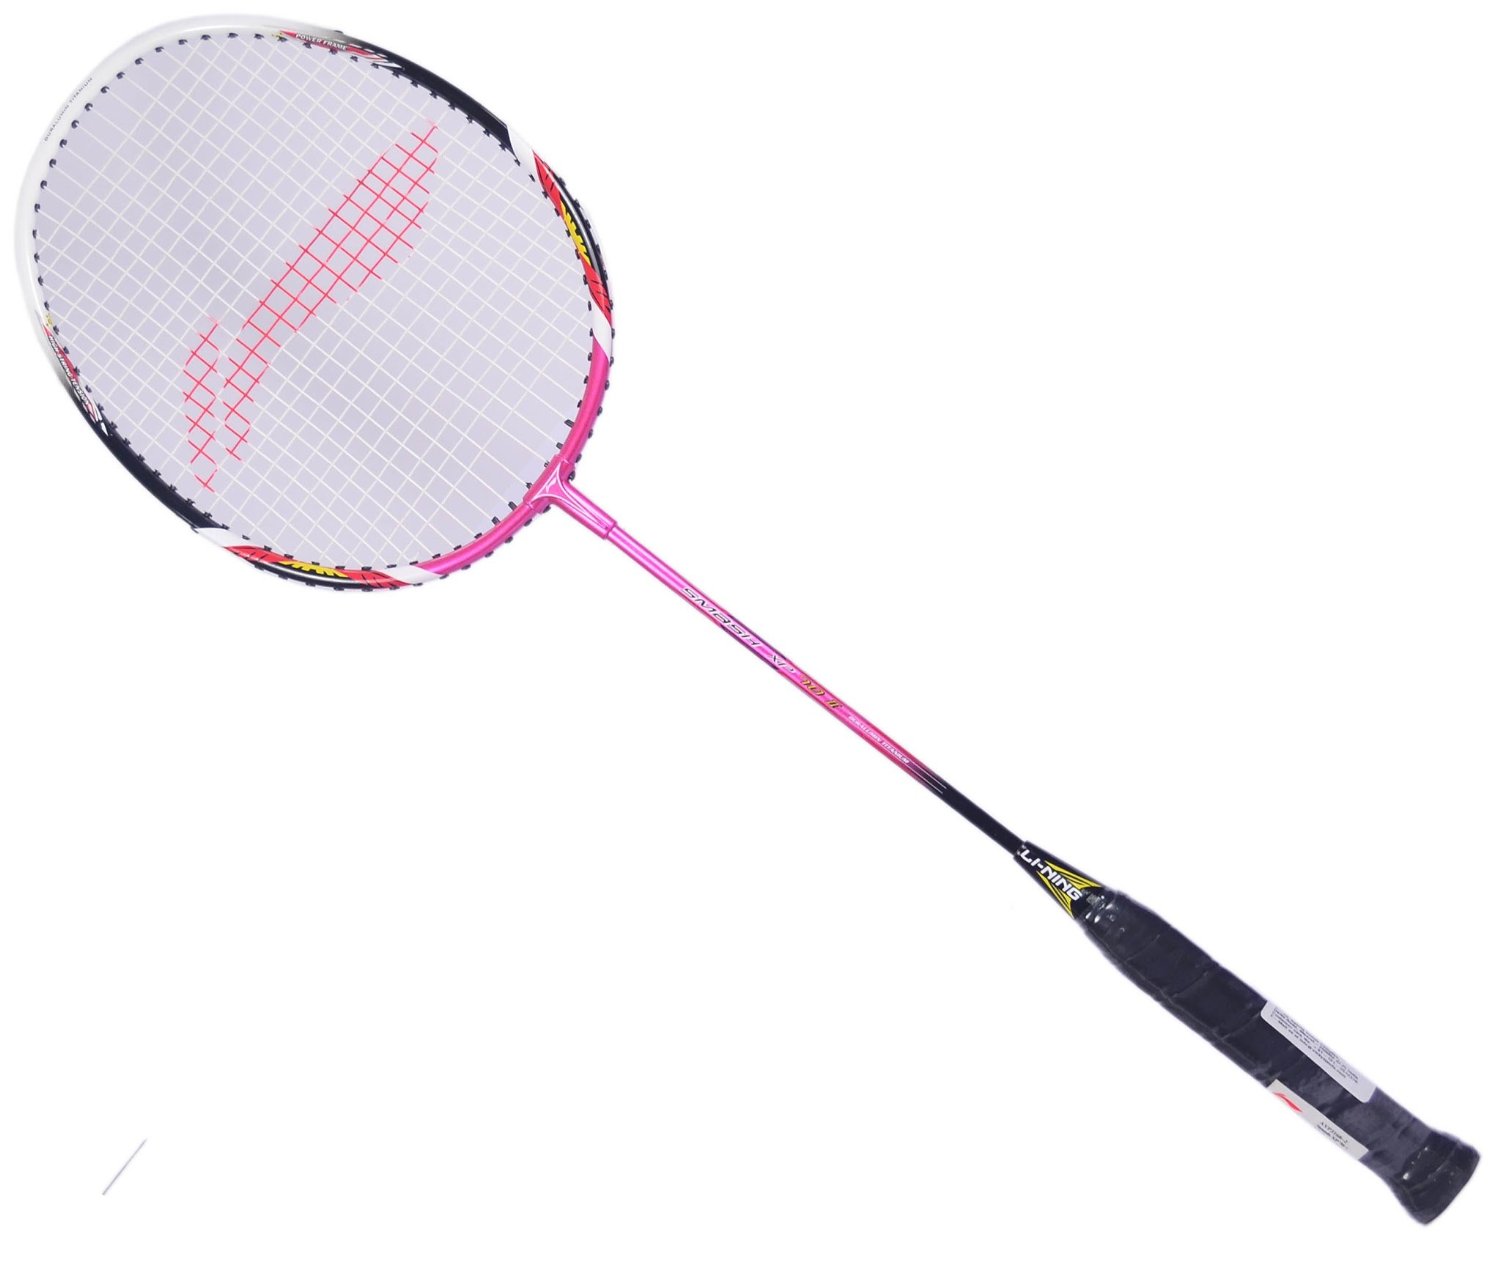 Buy Li Ning Smash Xp 70 Ii Badminton Racquet At Lowest Price Online ₹1290 From Shopclues